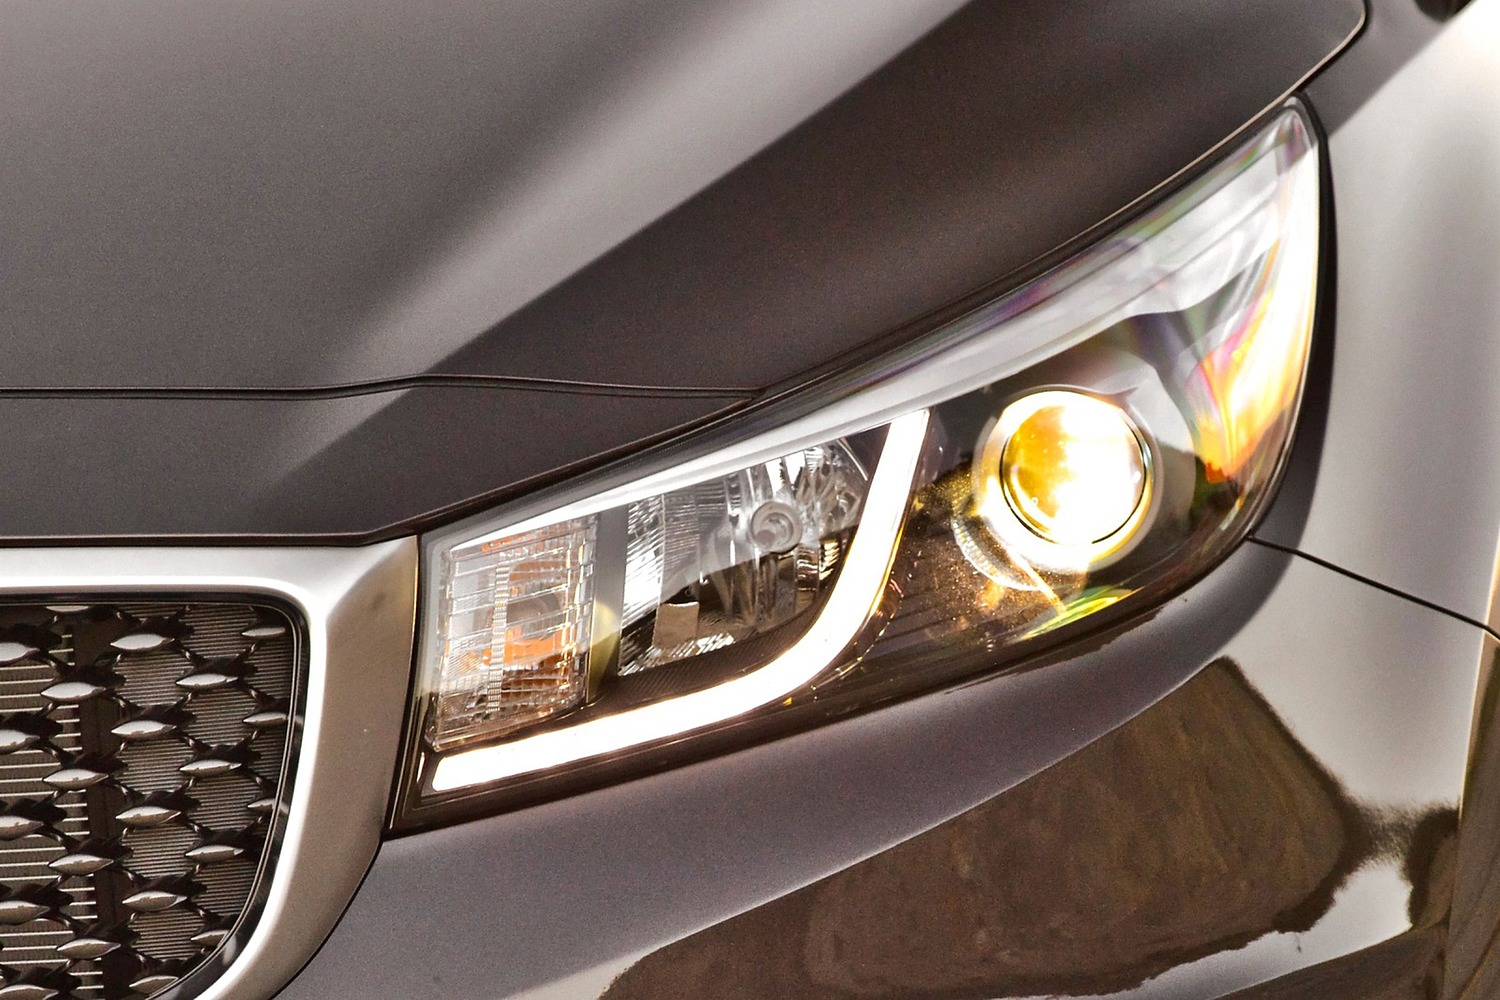 Kia Sedona SX Limited Passenger Minivan Headlamp Detail (2016 model year shown)